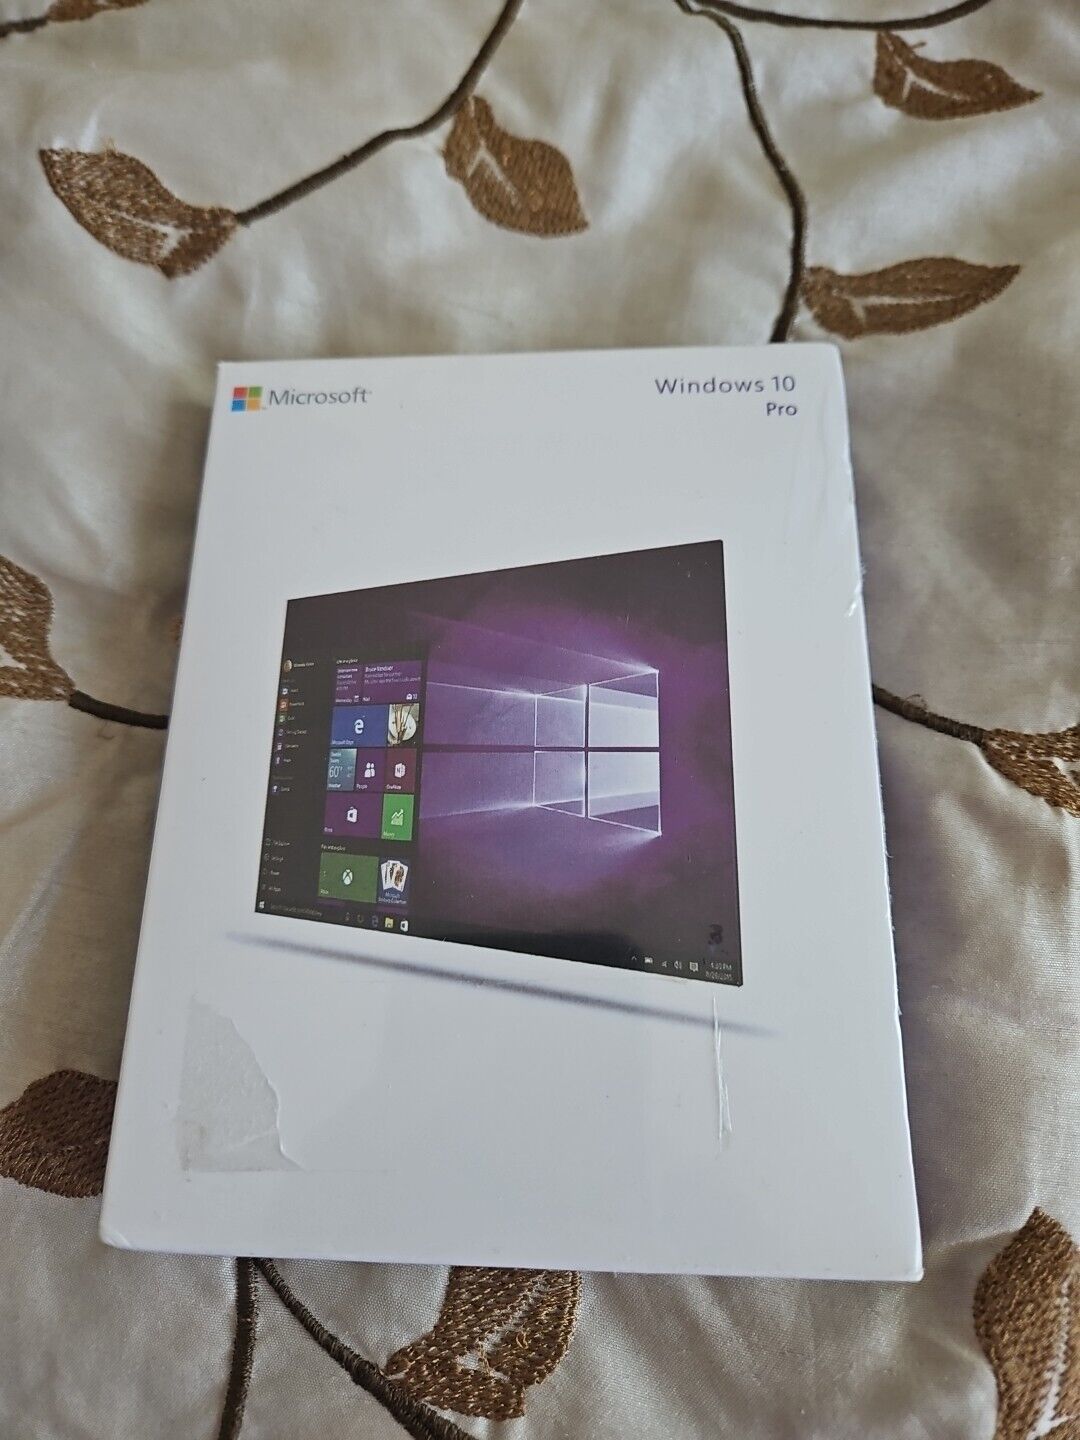 NEW Sealed Microsoft Windows 10 Pro Professional  USB 3.0